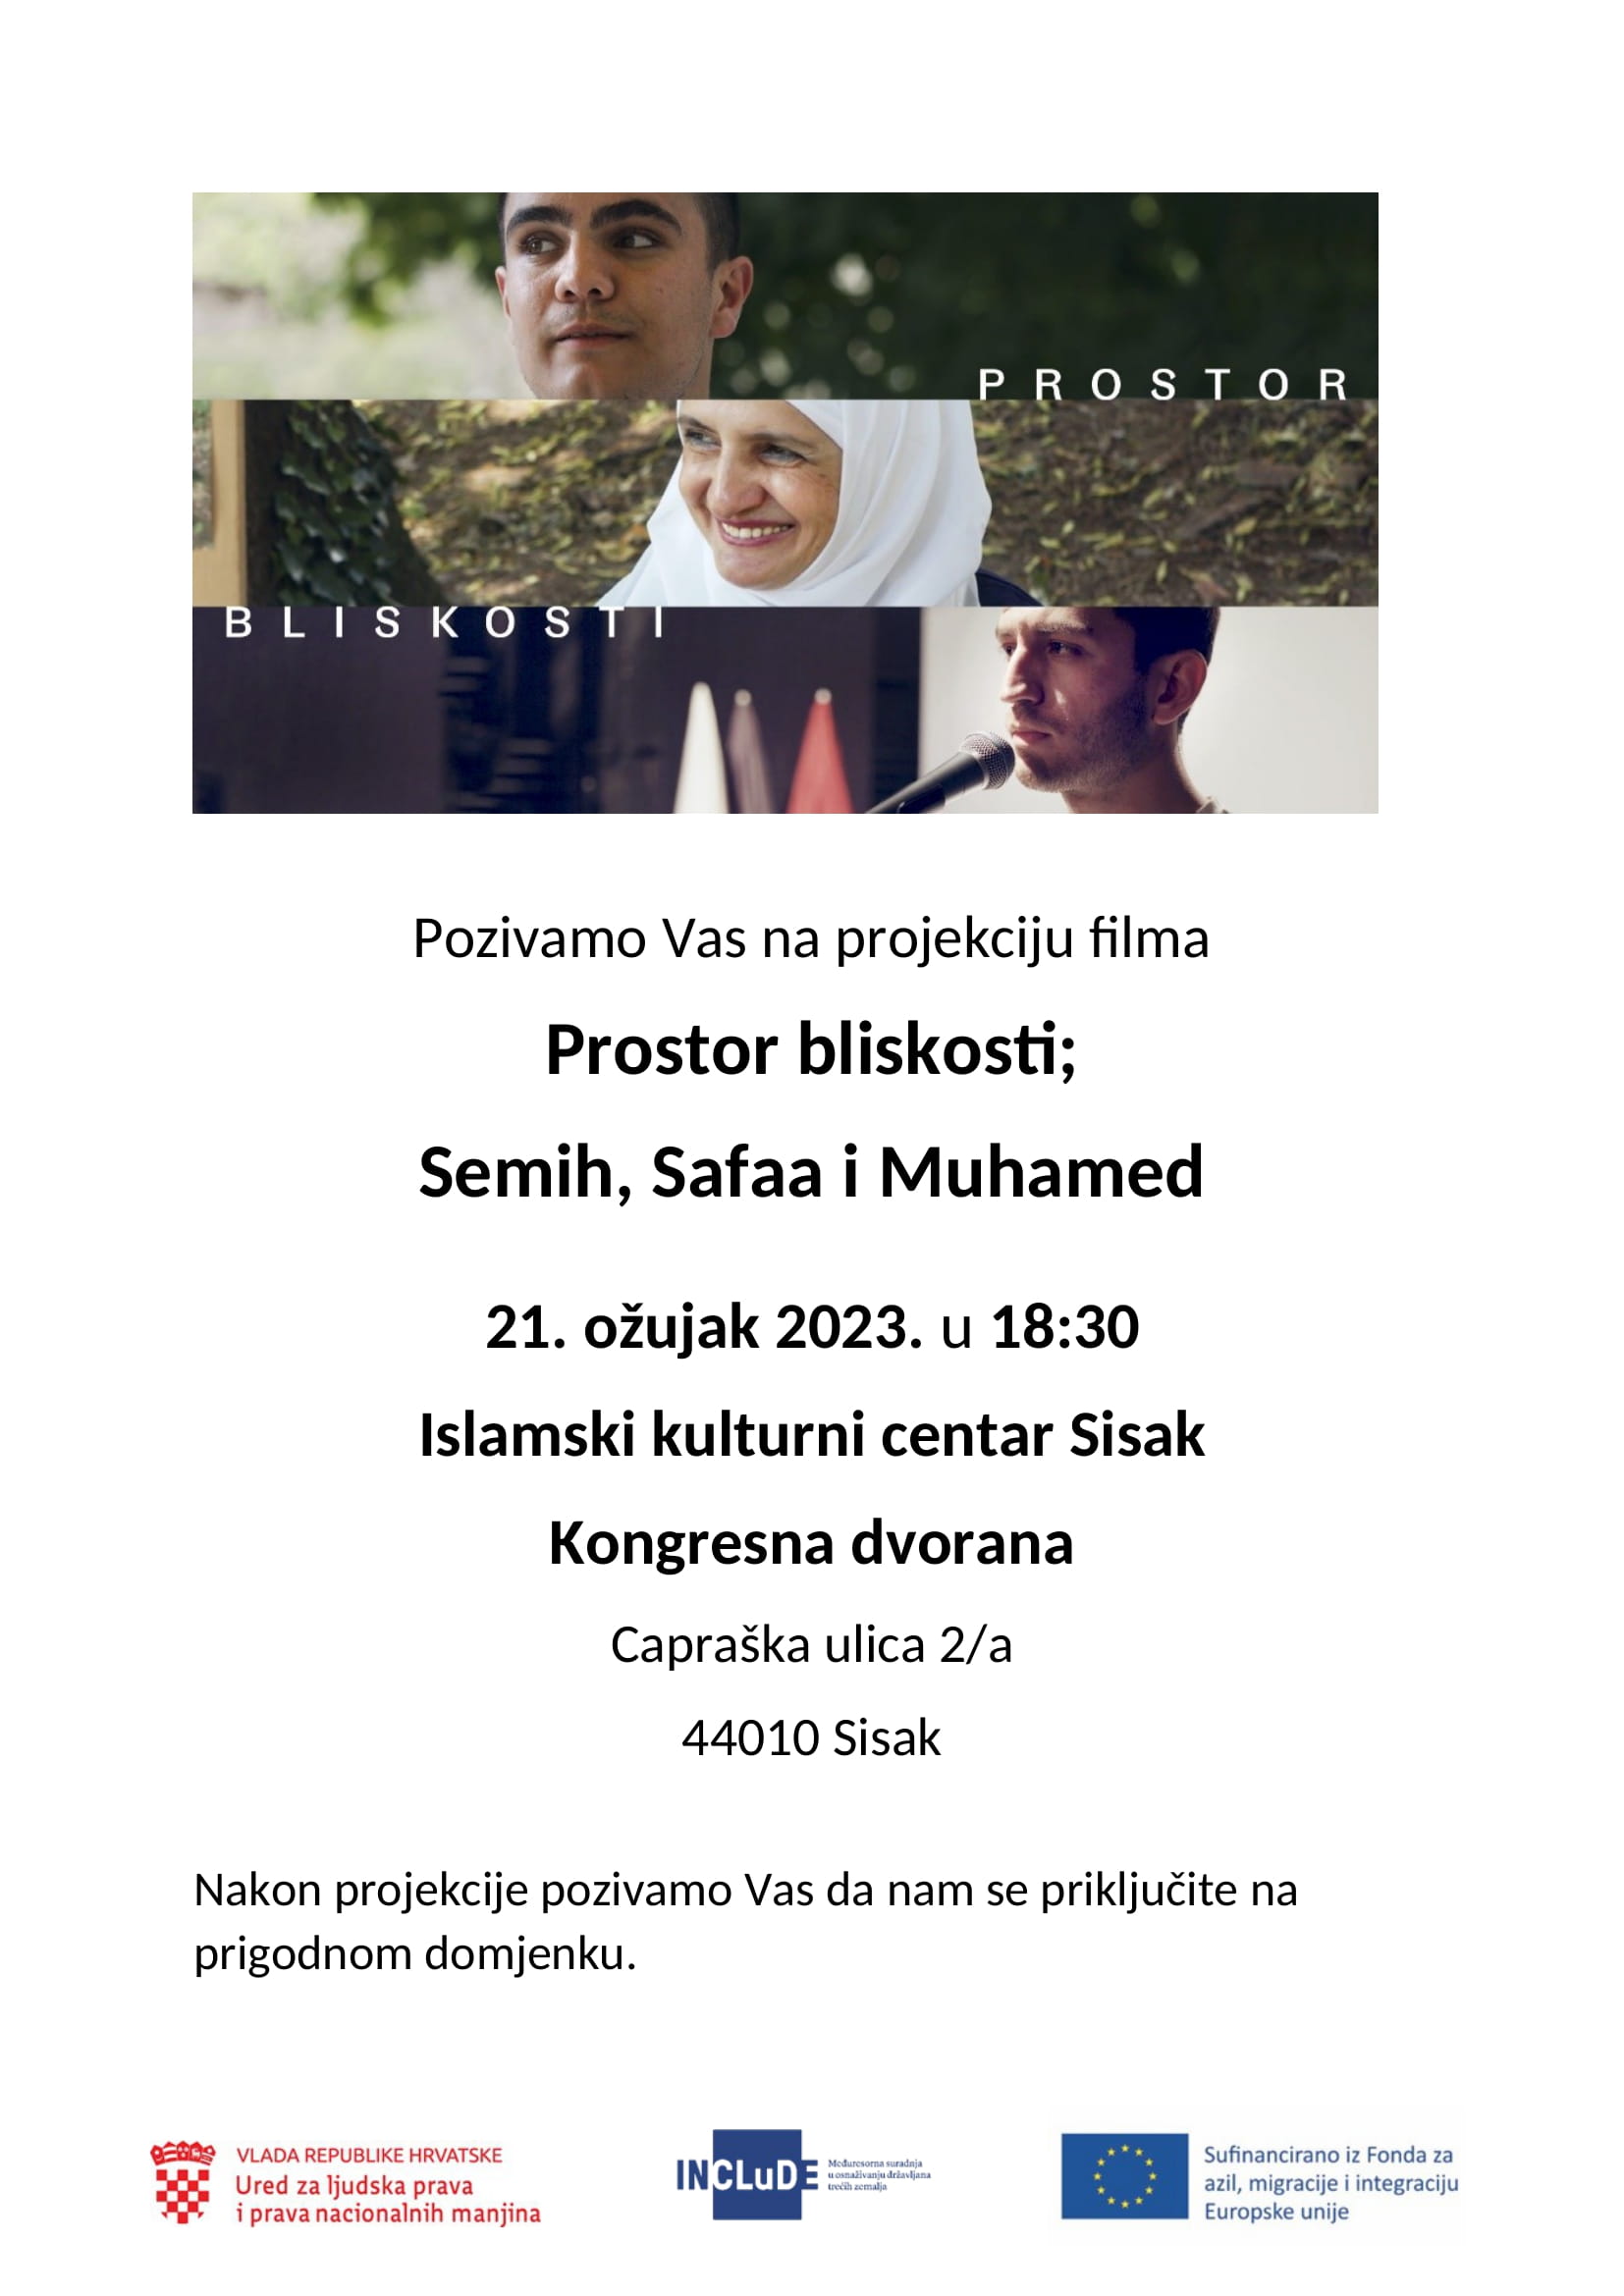 You are currently viewing Projekcija filma “Prostor bliskosti” u Islamskom kulturnom centru Sisak